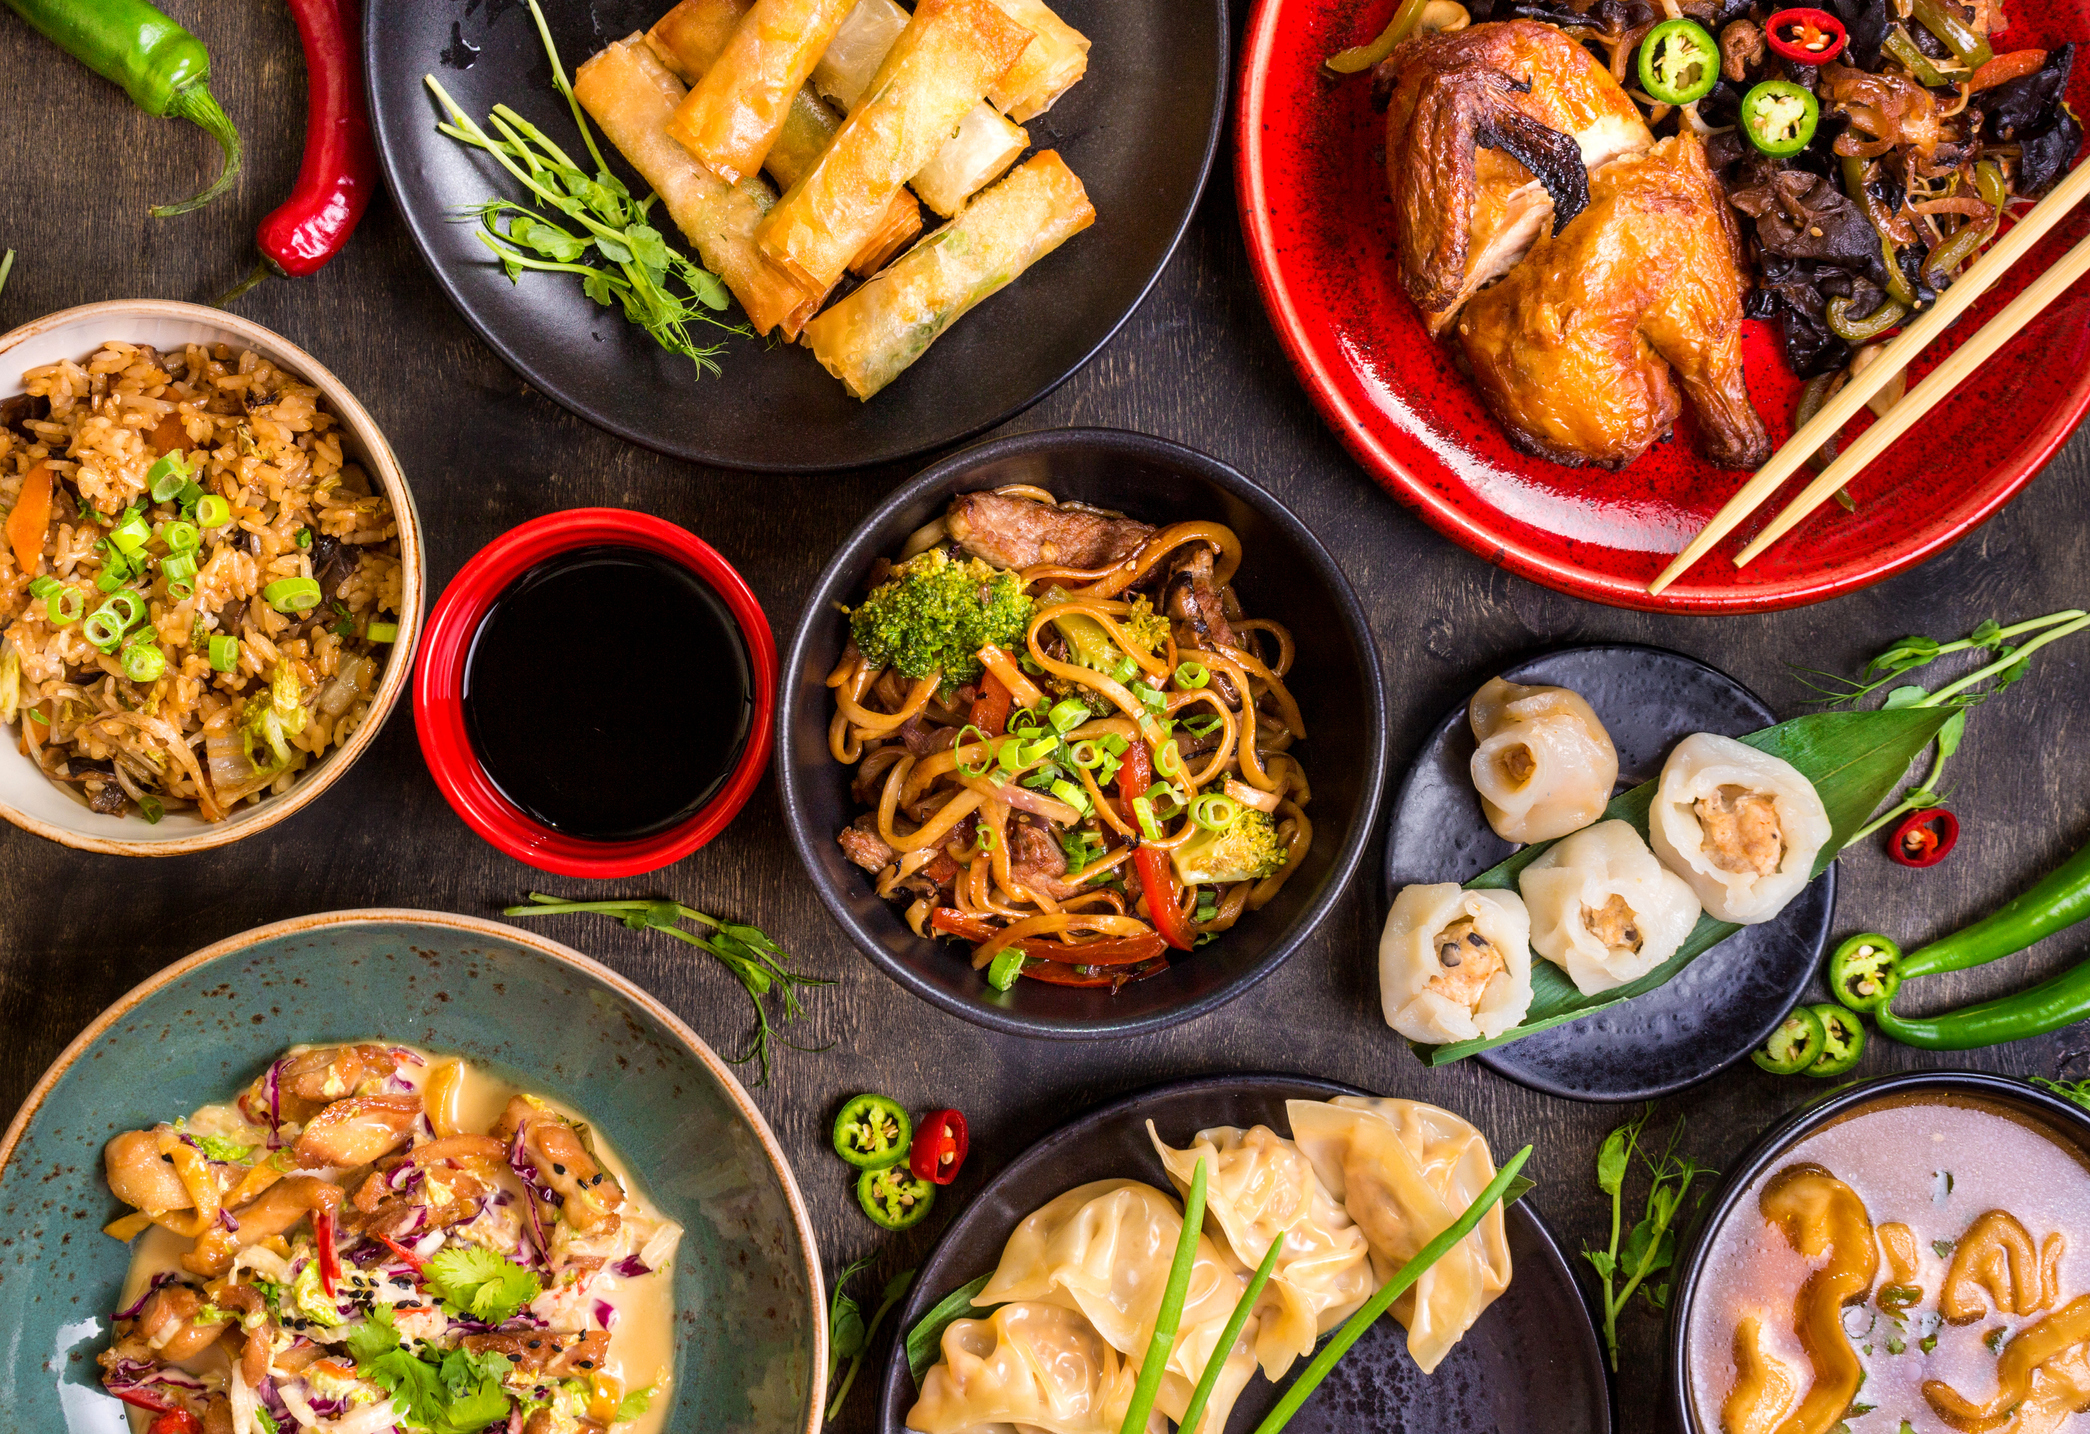 Embark on a Culinary Journey at the Houston Hong Kong Food Market